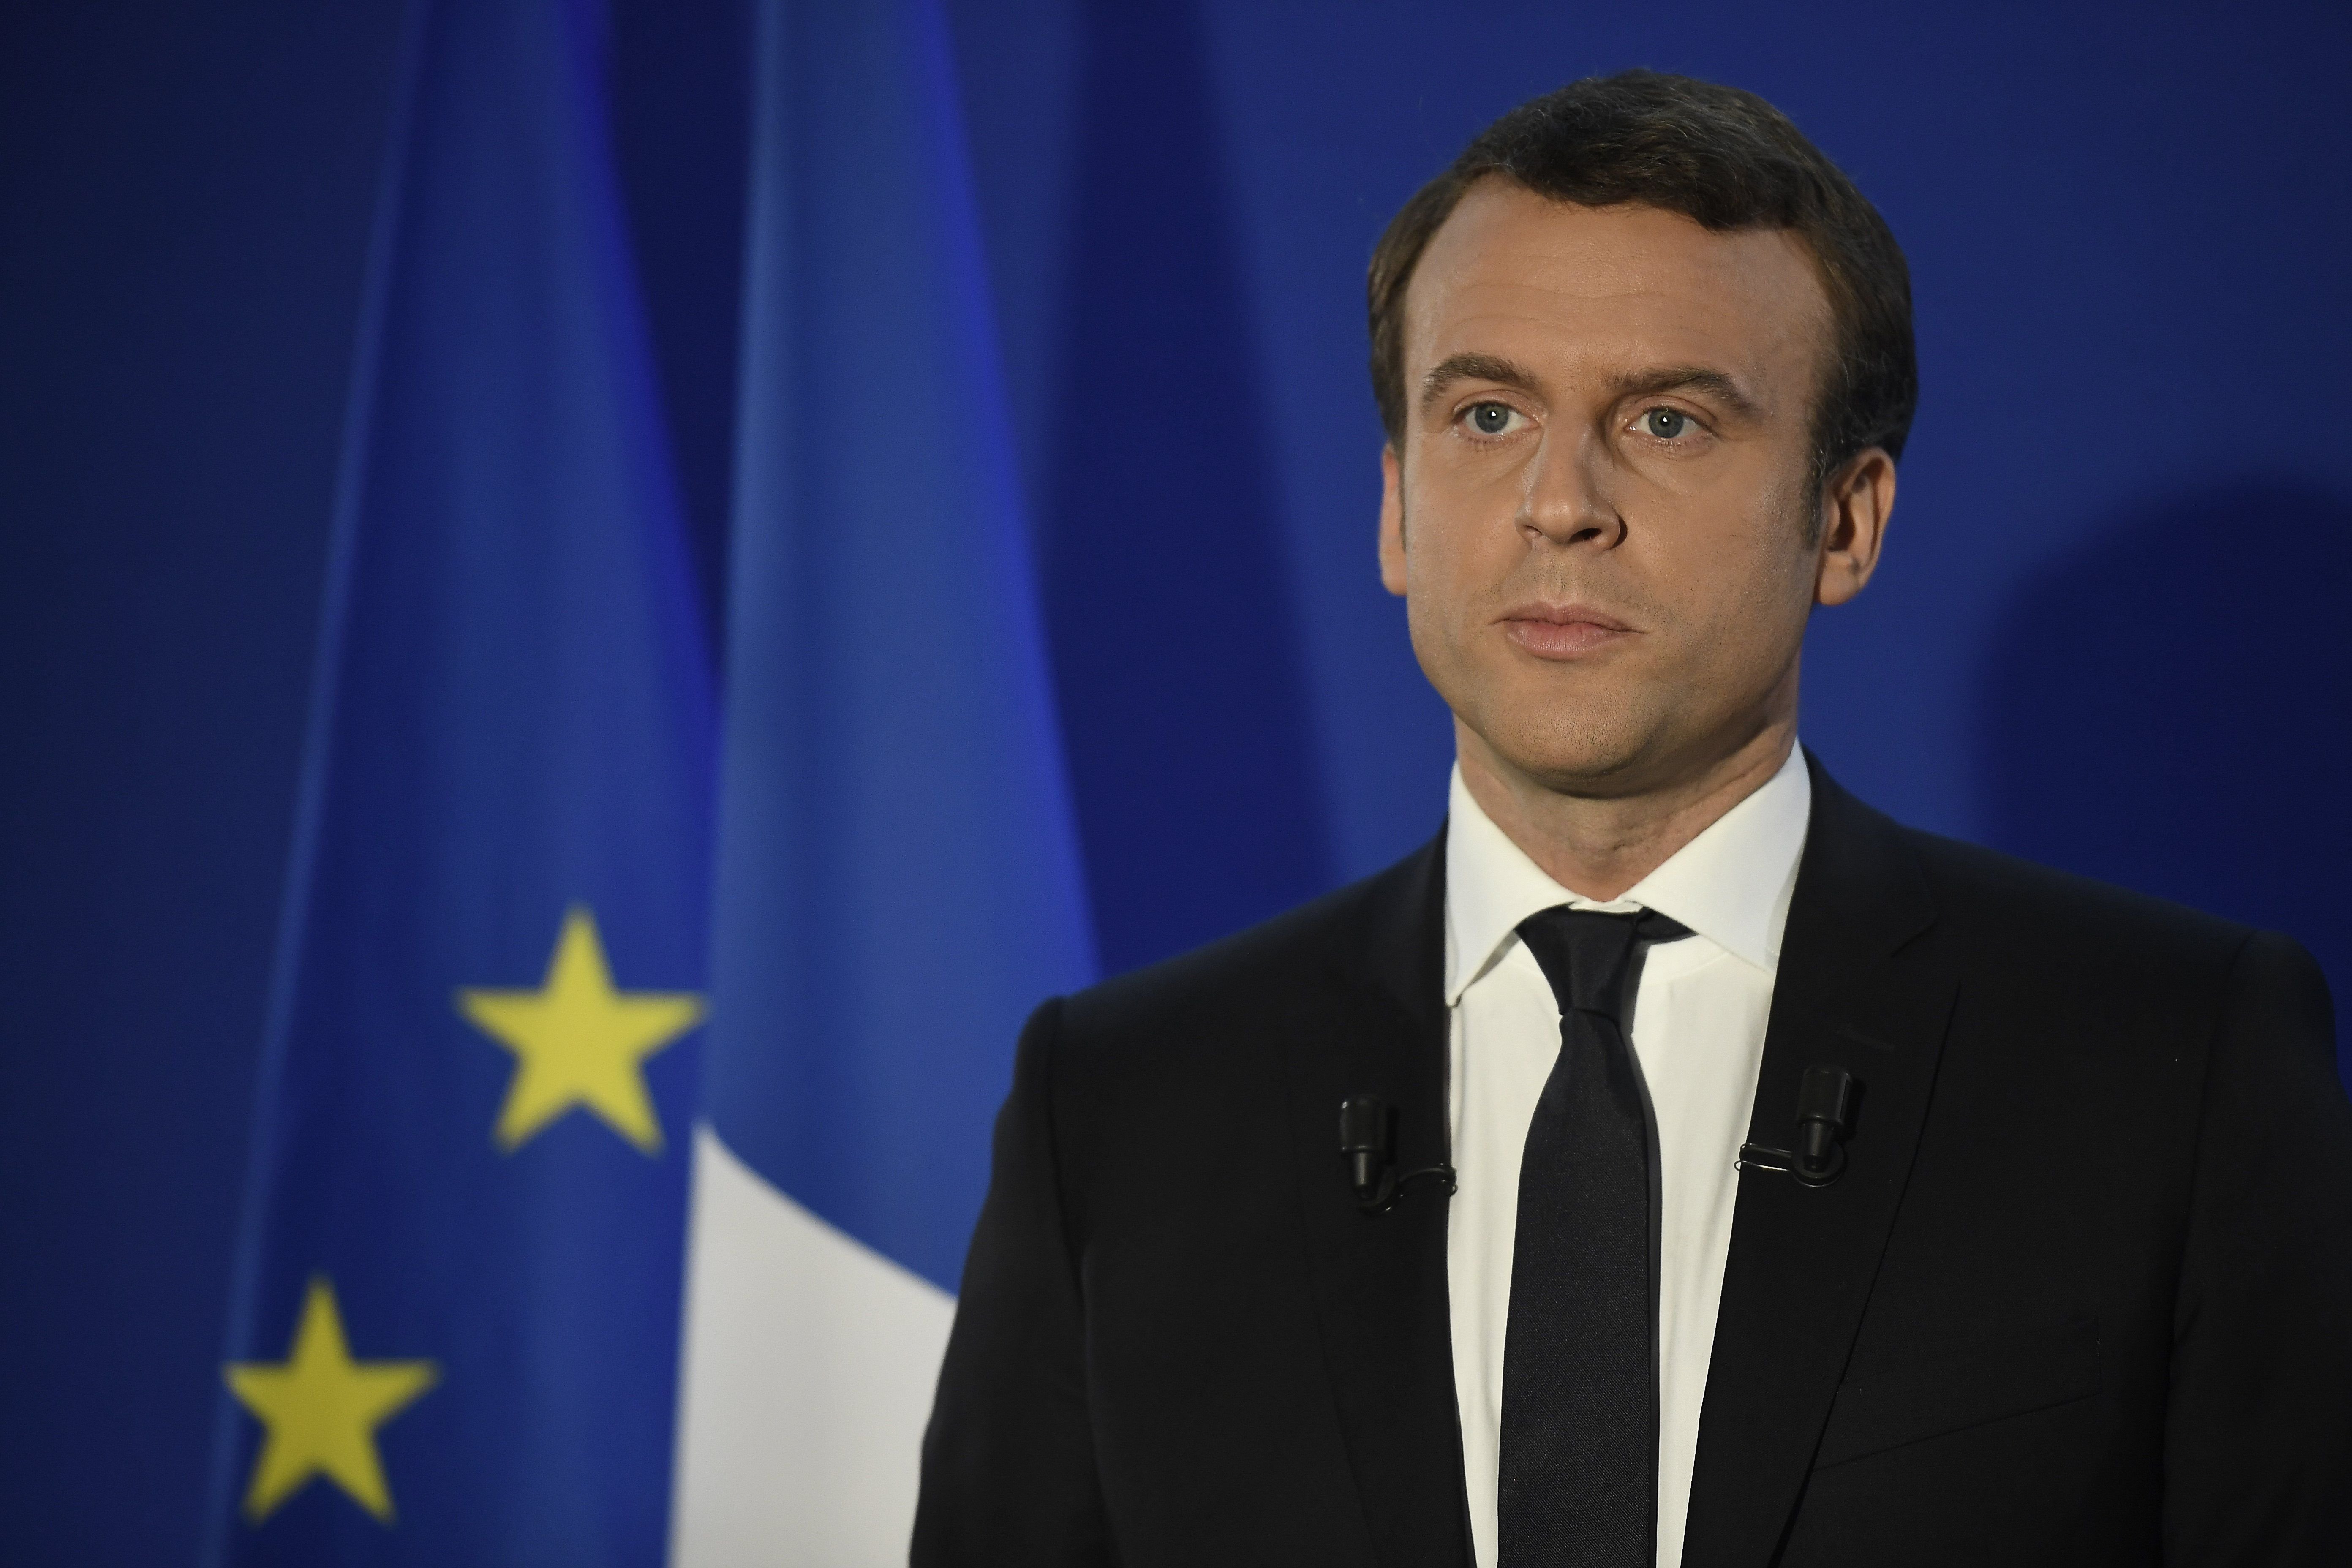 El maquillaje de Macron ha costado 26.000 euros a Francia en tres meses